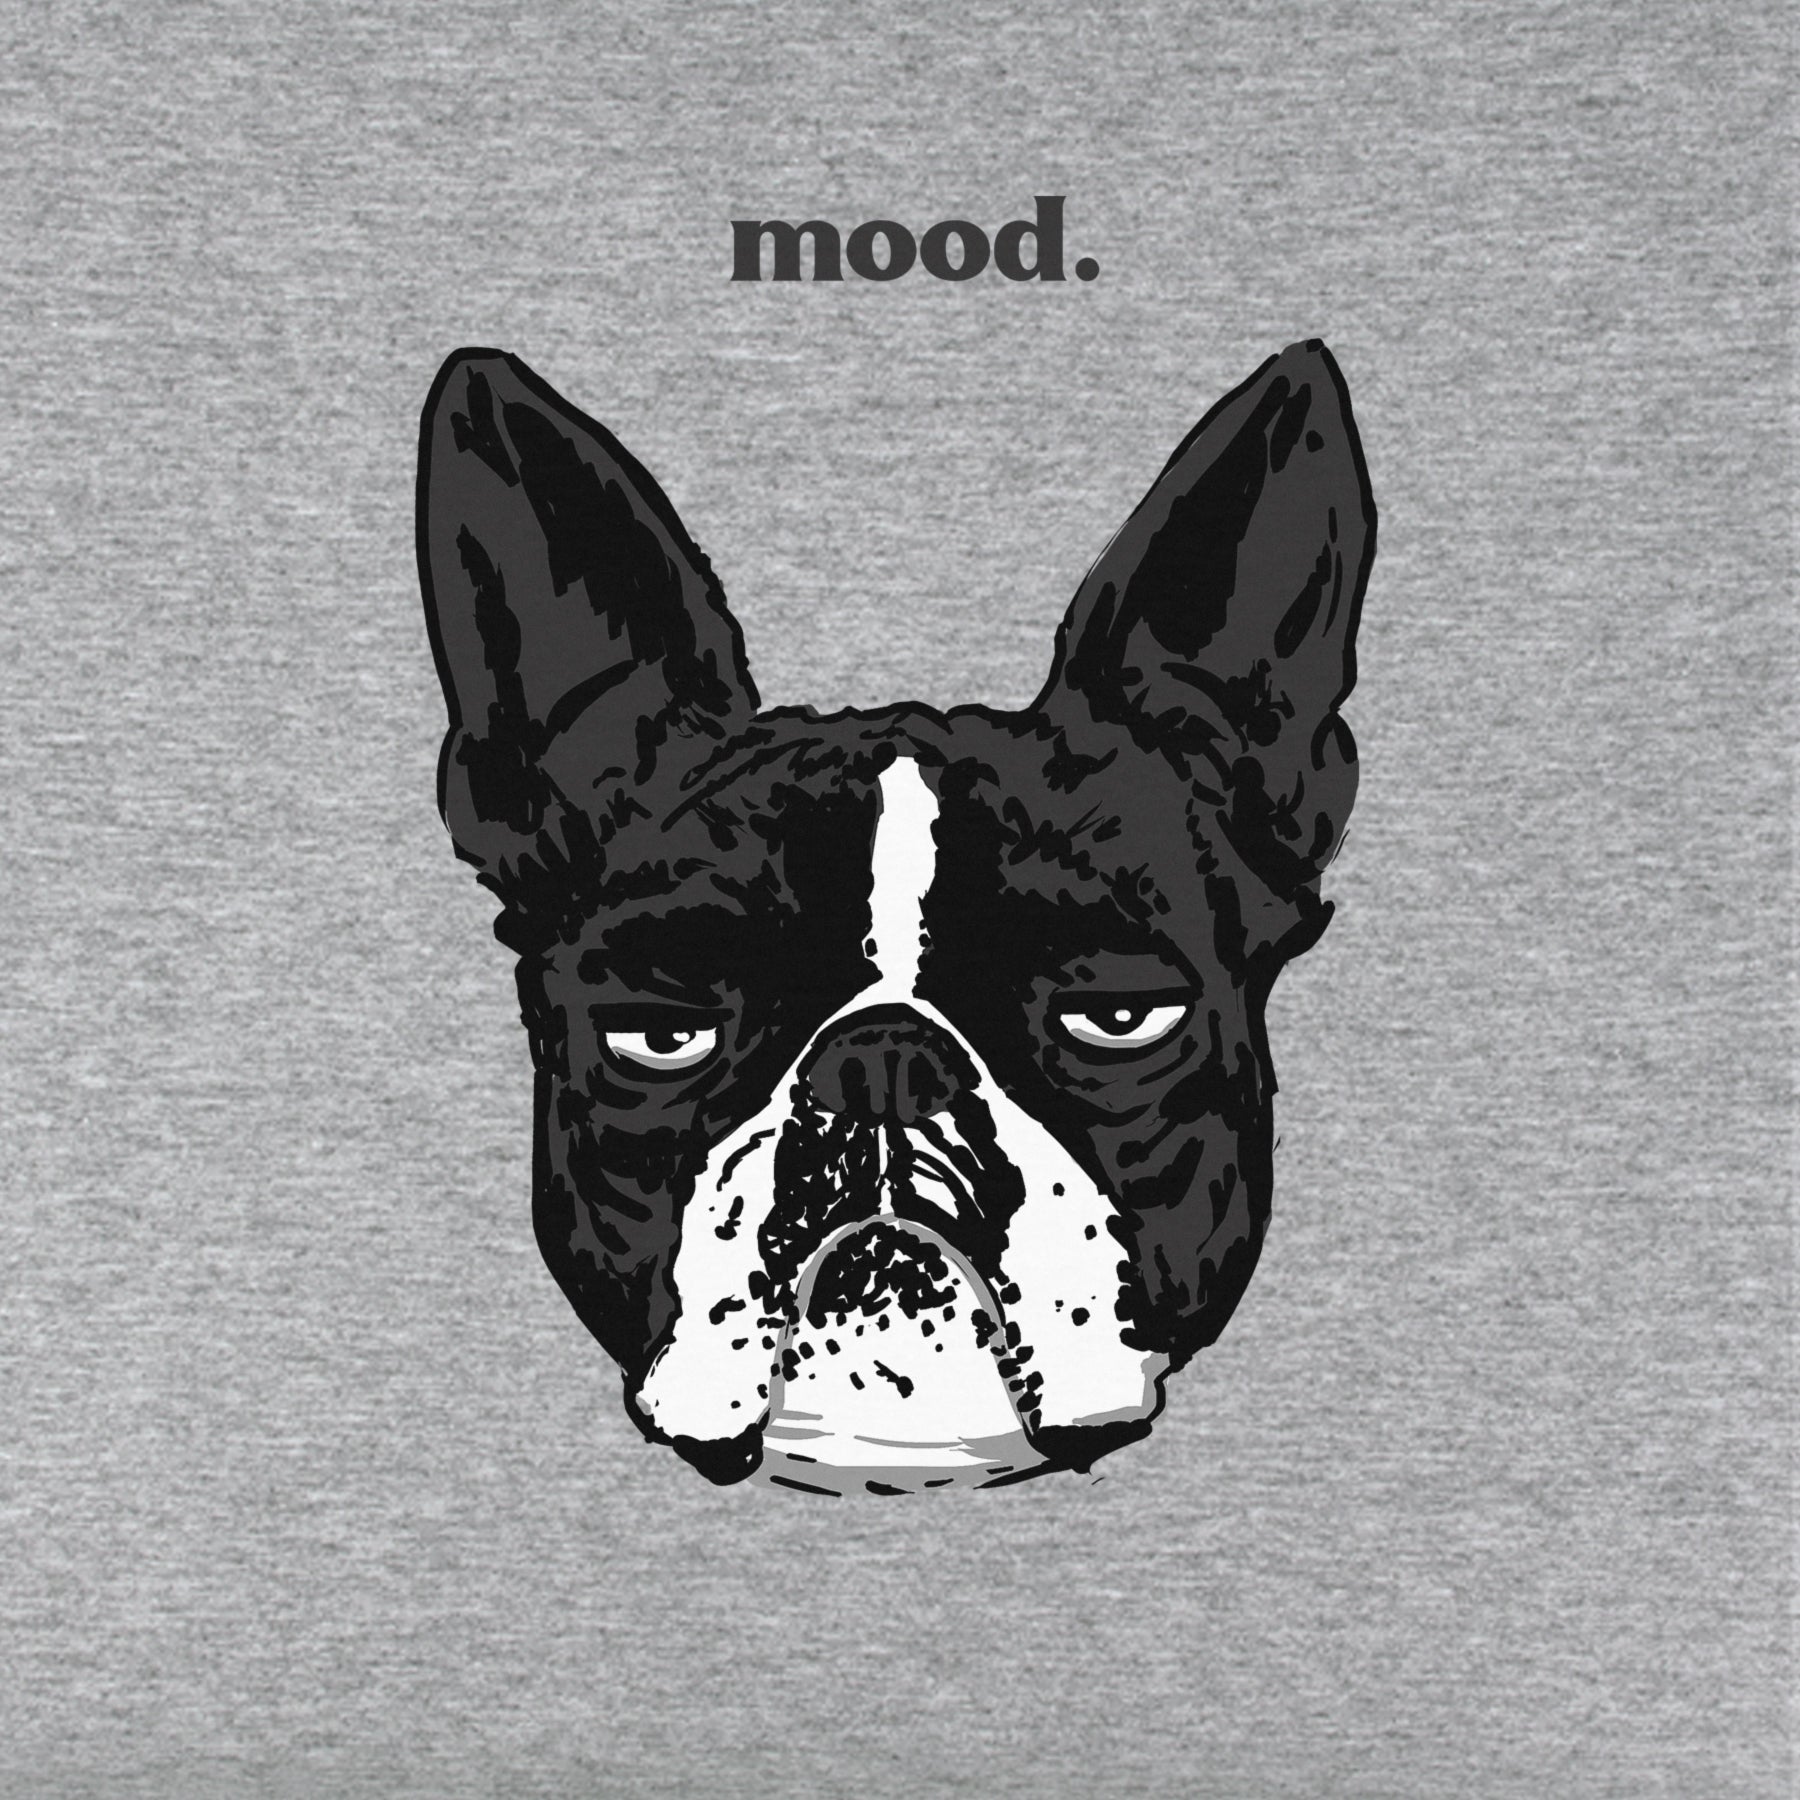 Mood Terrier Youth T-Shirt - Chowdaheadz